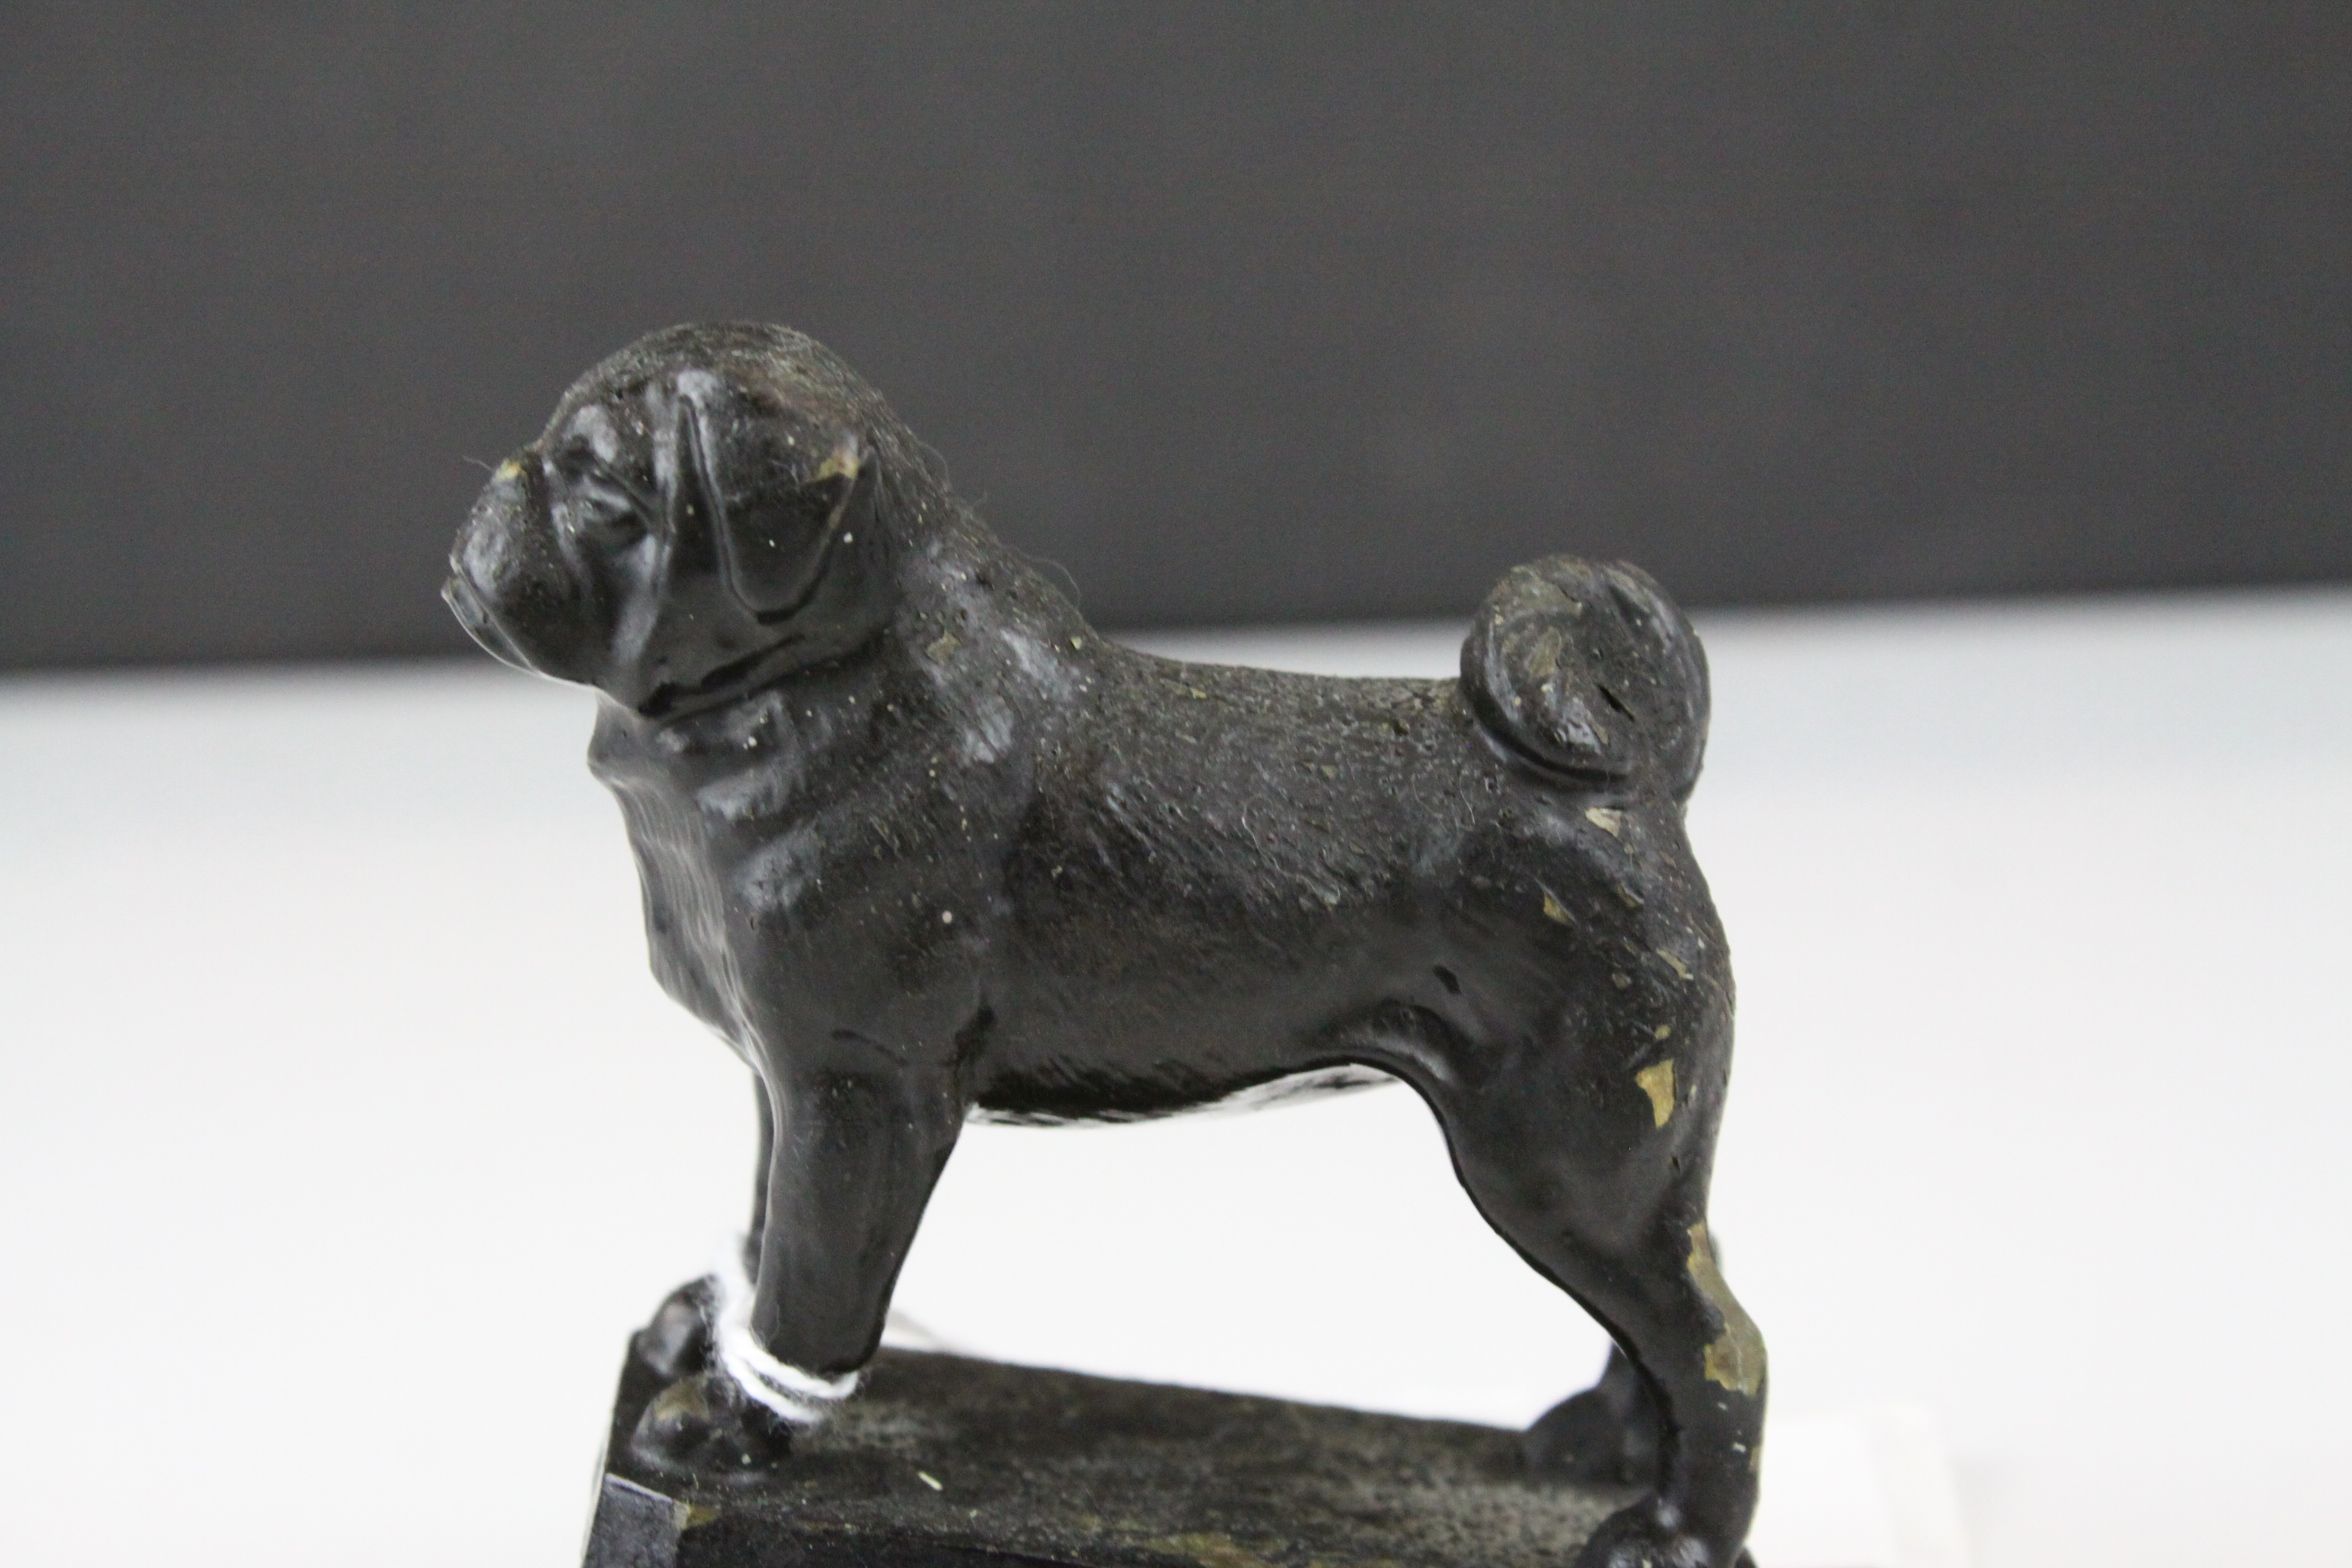 Cast Metal Model of a Pug Dog, 9cms high - Image 2 of 4